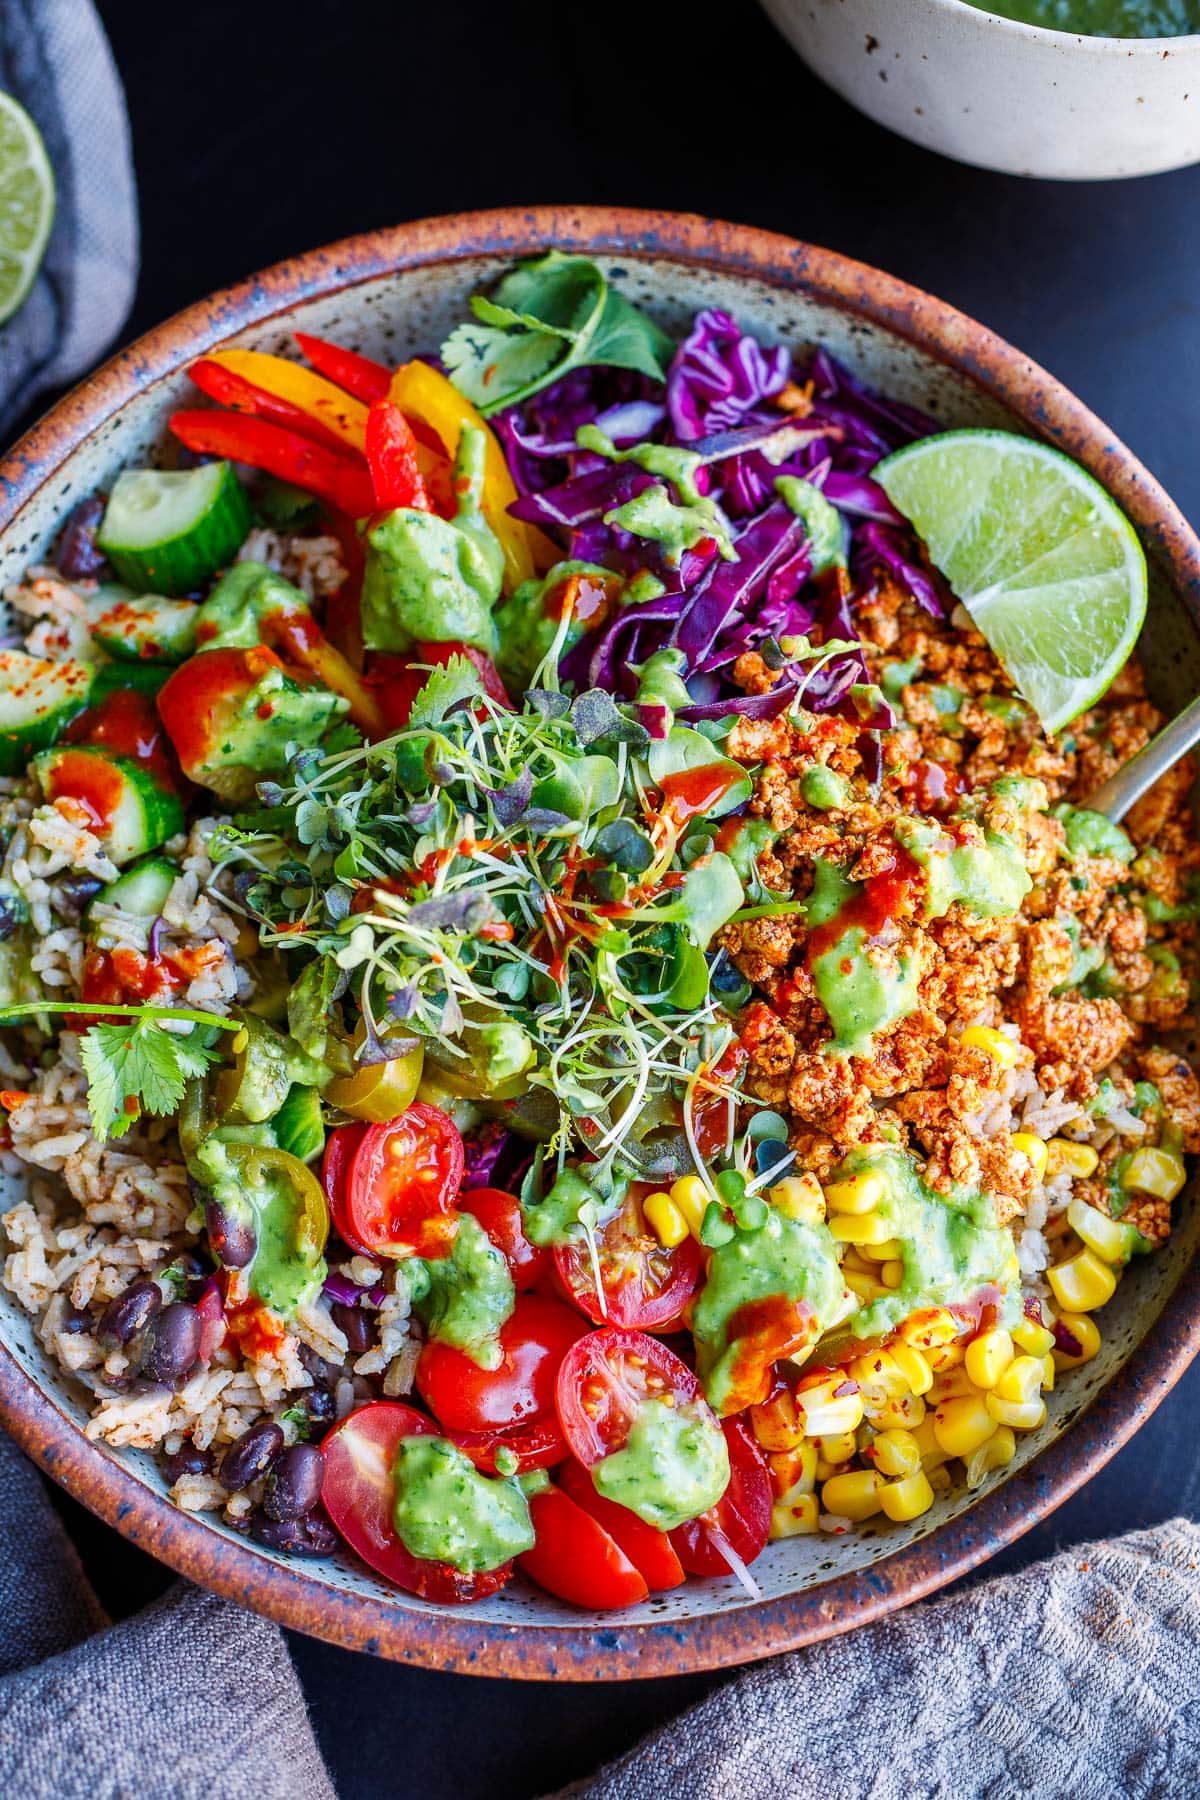 A burrito bowl with sofritas, rice, black beans, fresh veggies, avocado sauce. 